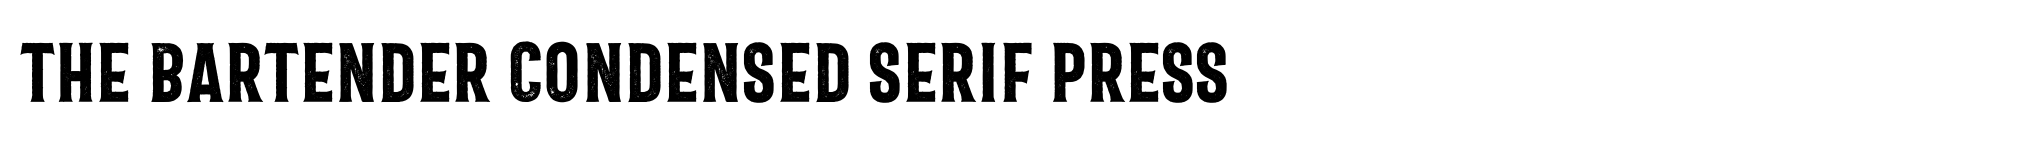 The Bartender Condensed Serif Press image